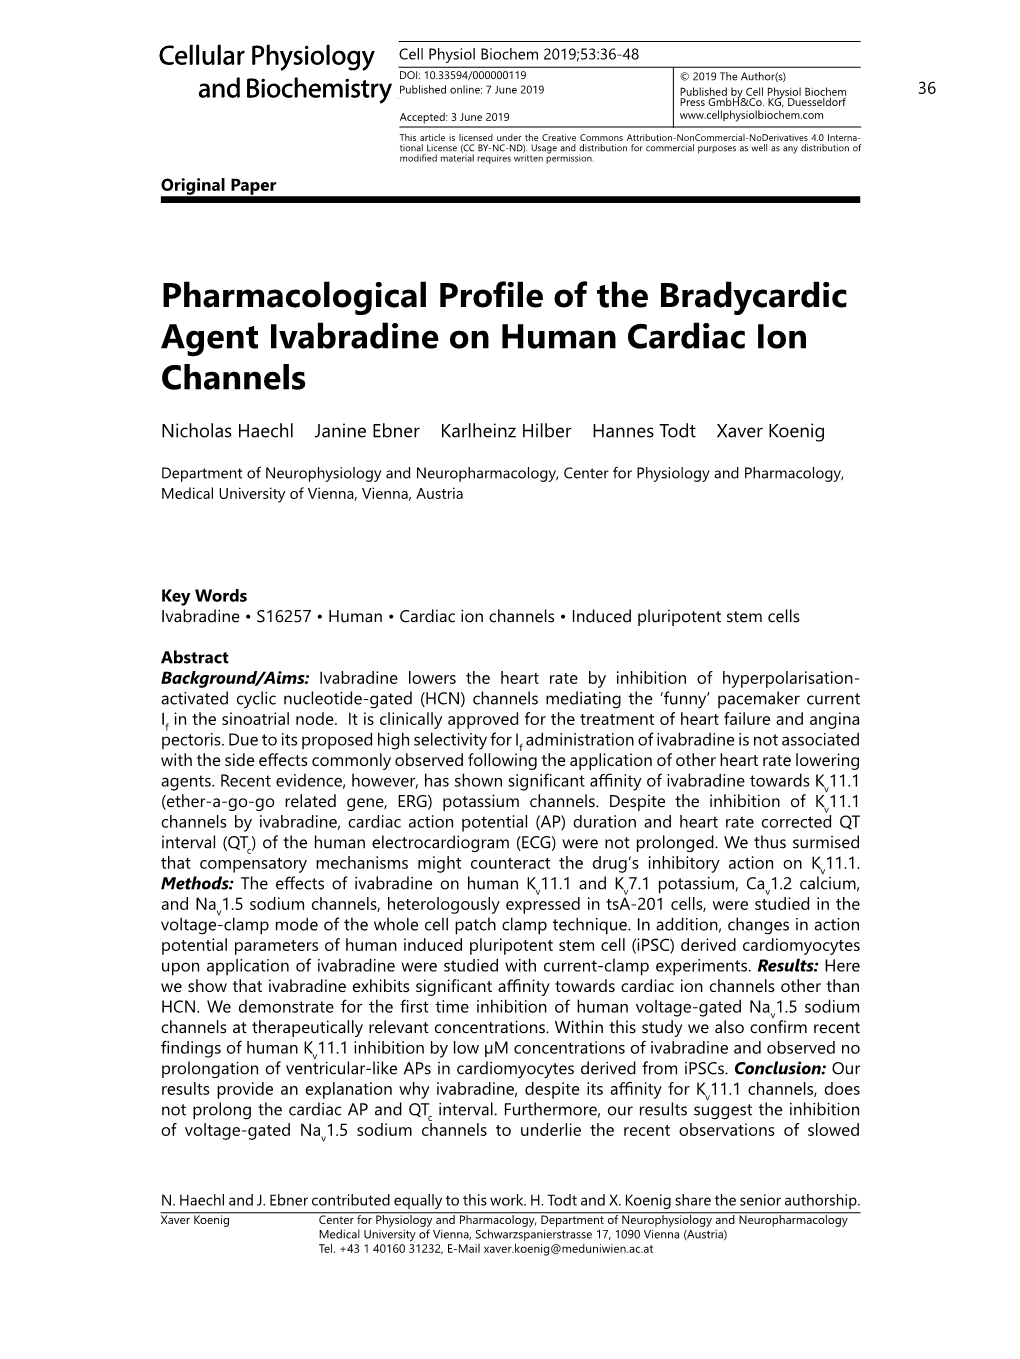 Pharmacological Profile of the Bradycardic Agent Ivabradine on Human Cardiac Ion Channels